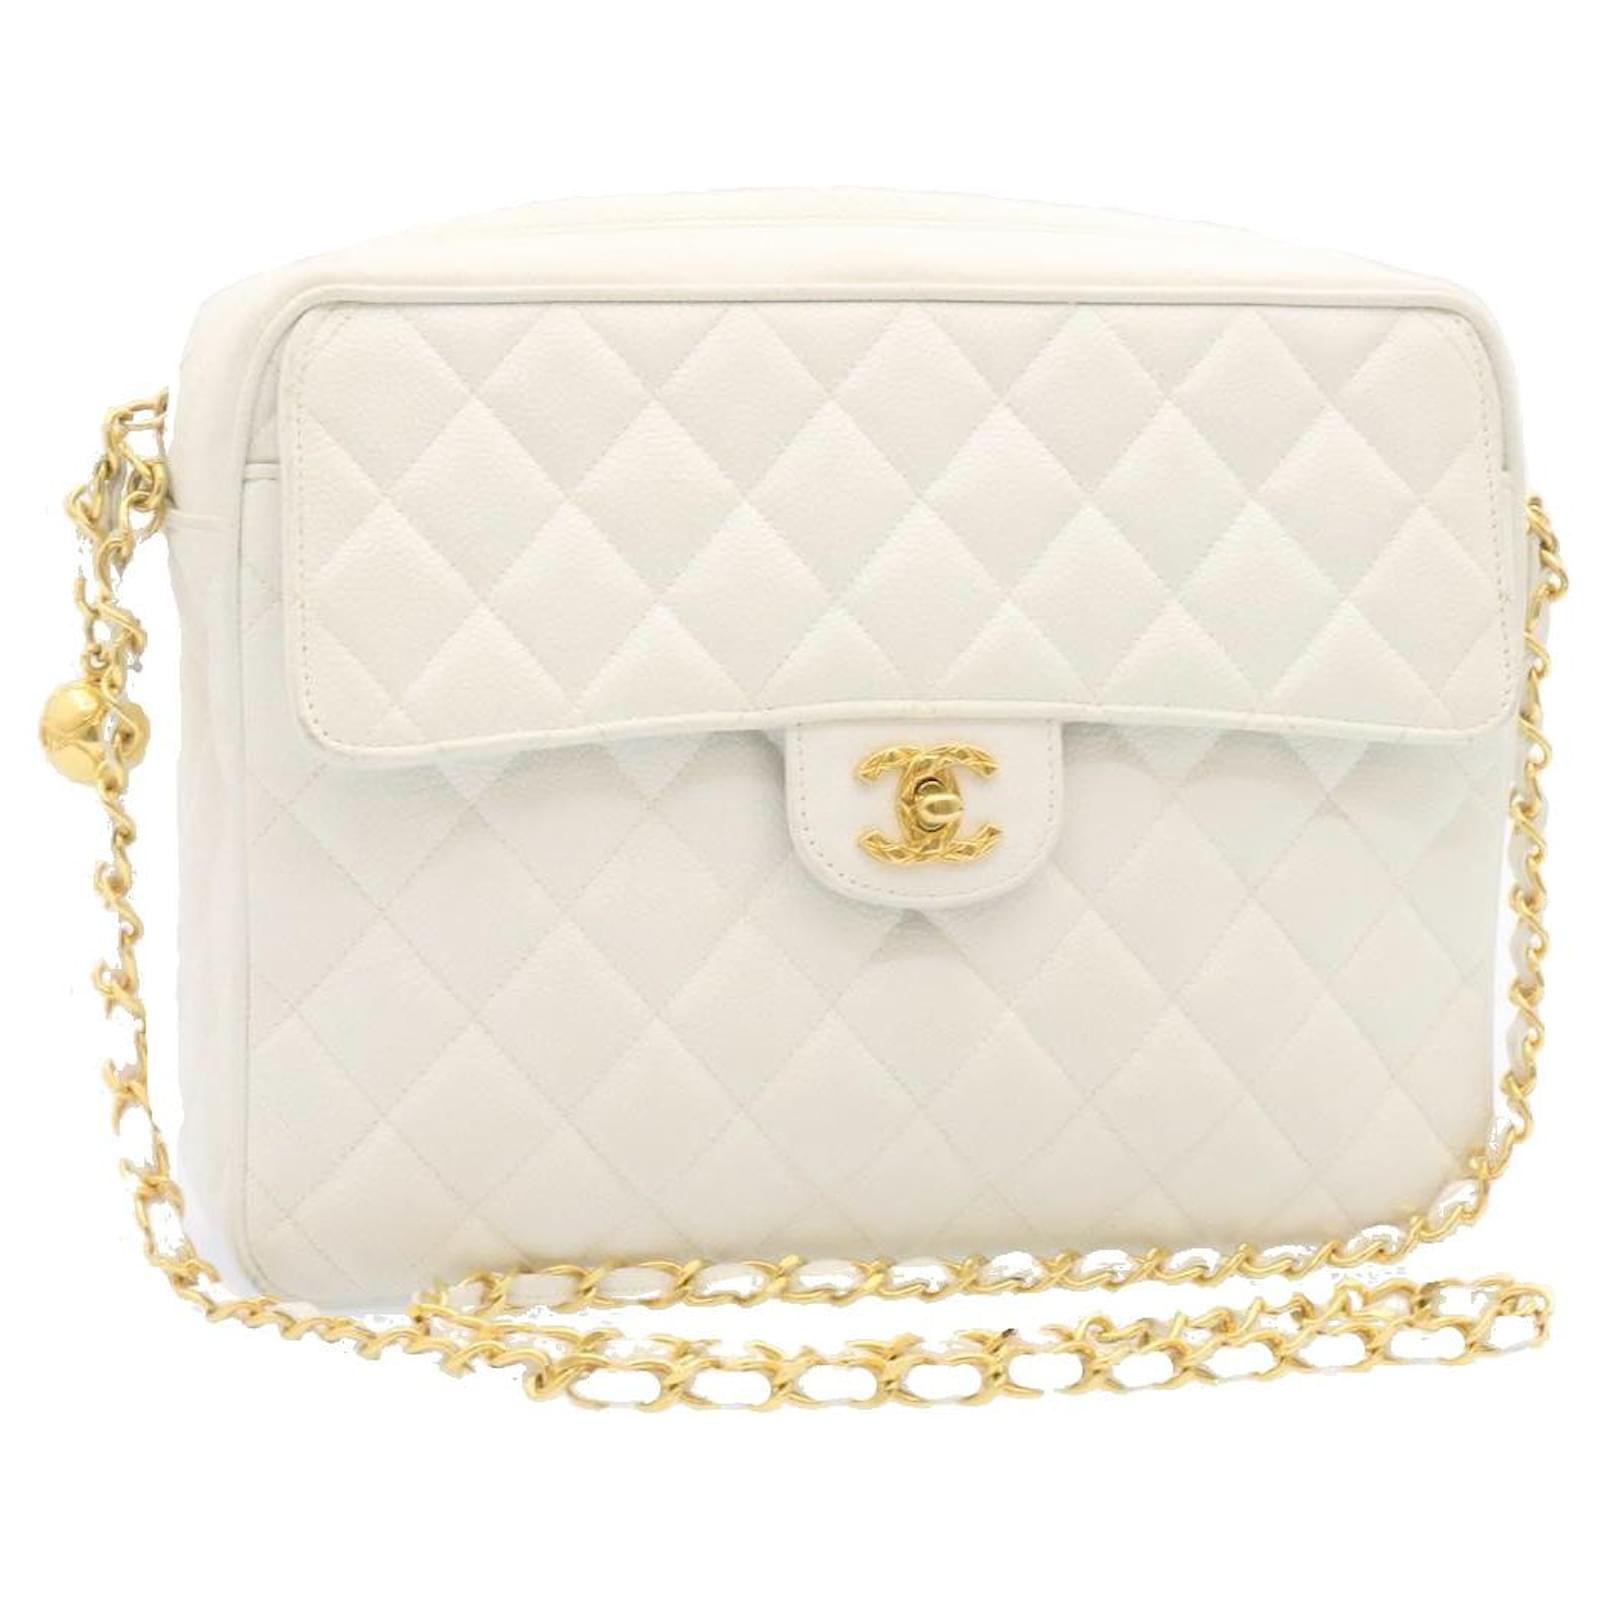 Handbags Chanel Chanel Matelasse Chain Shoulder Bag Caviar Skin Gold White CC Auth am1370ga